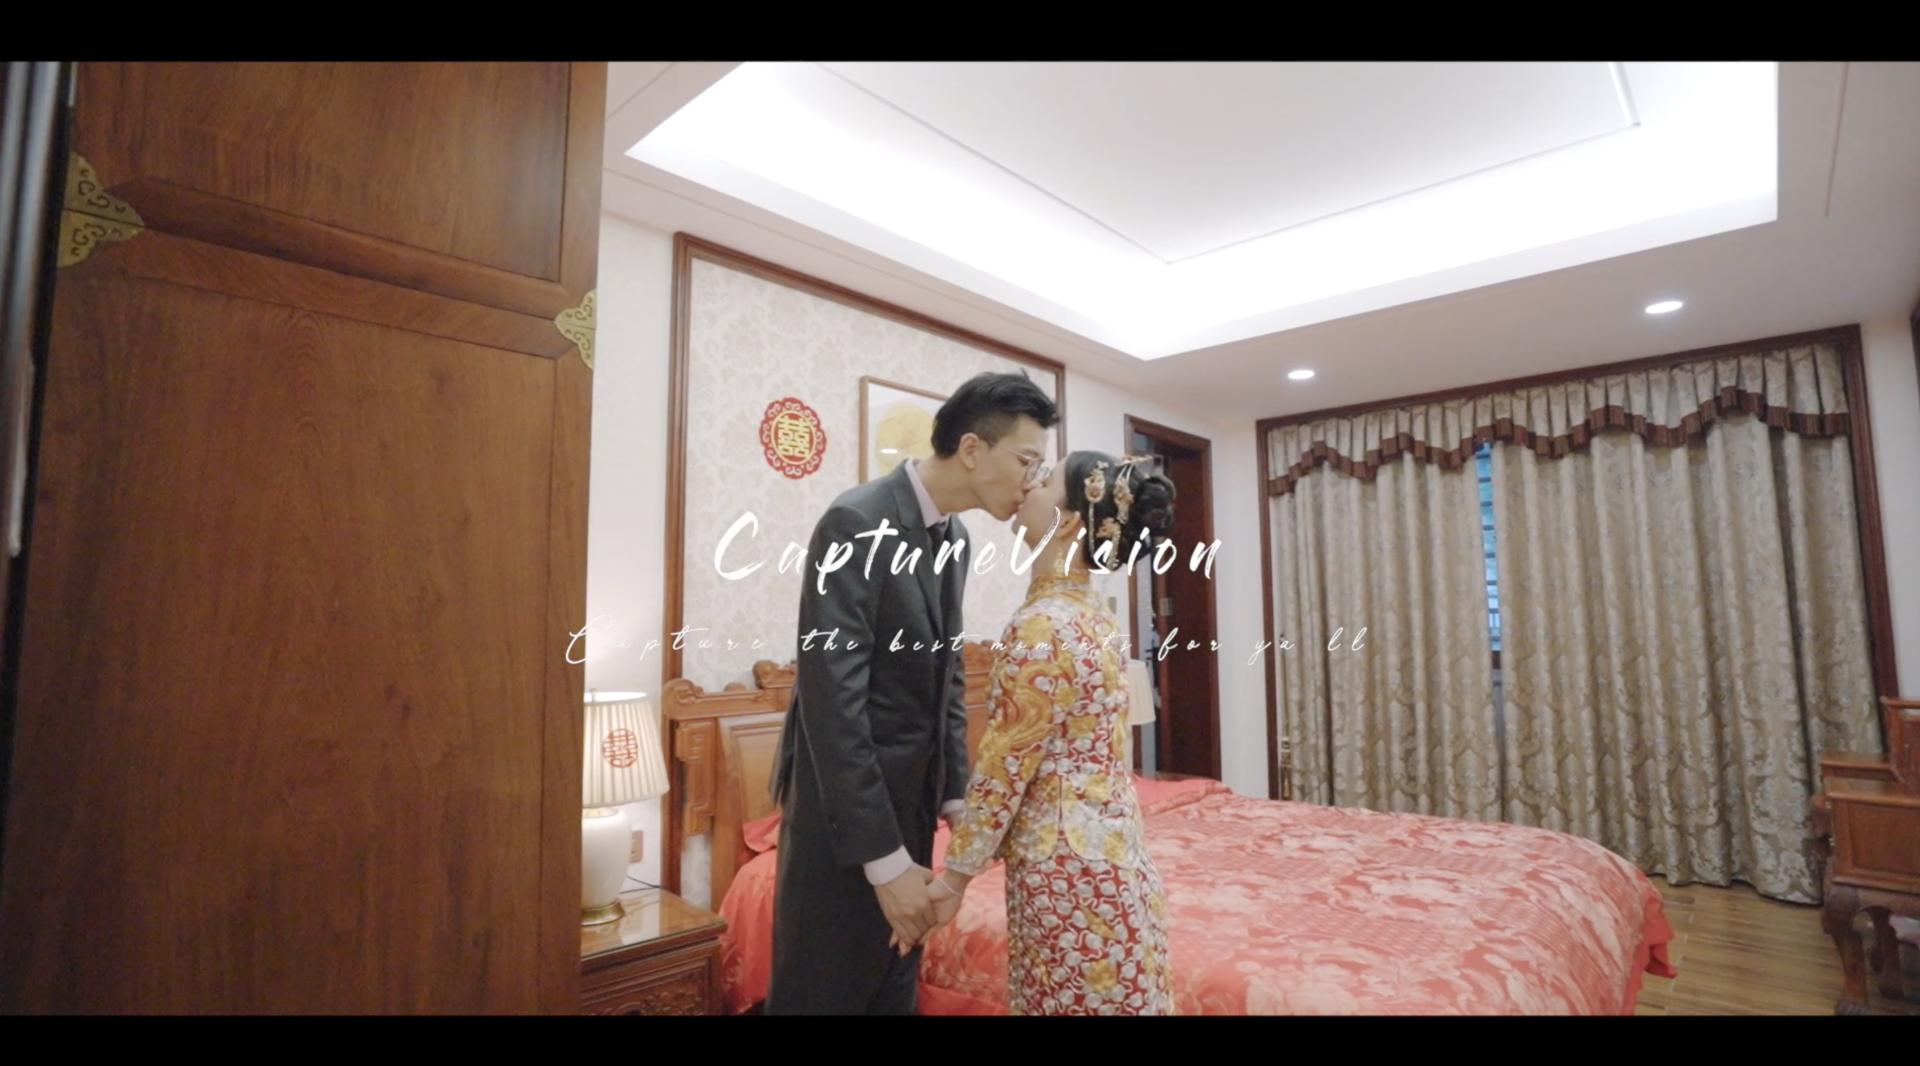 Liang + Lv WeddingFilm | CaptureVIsion婚礼电影